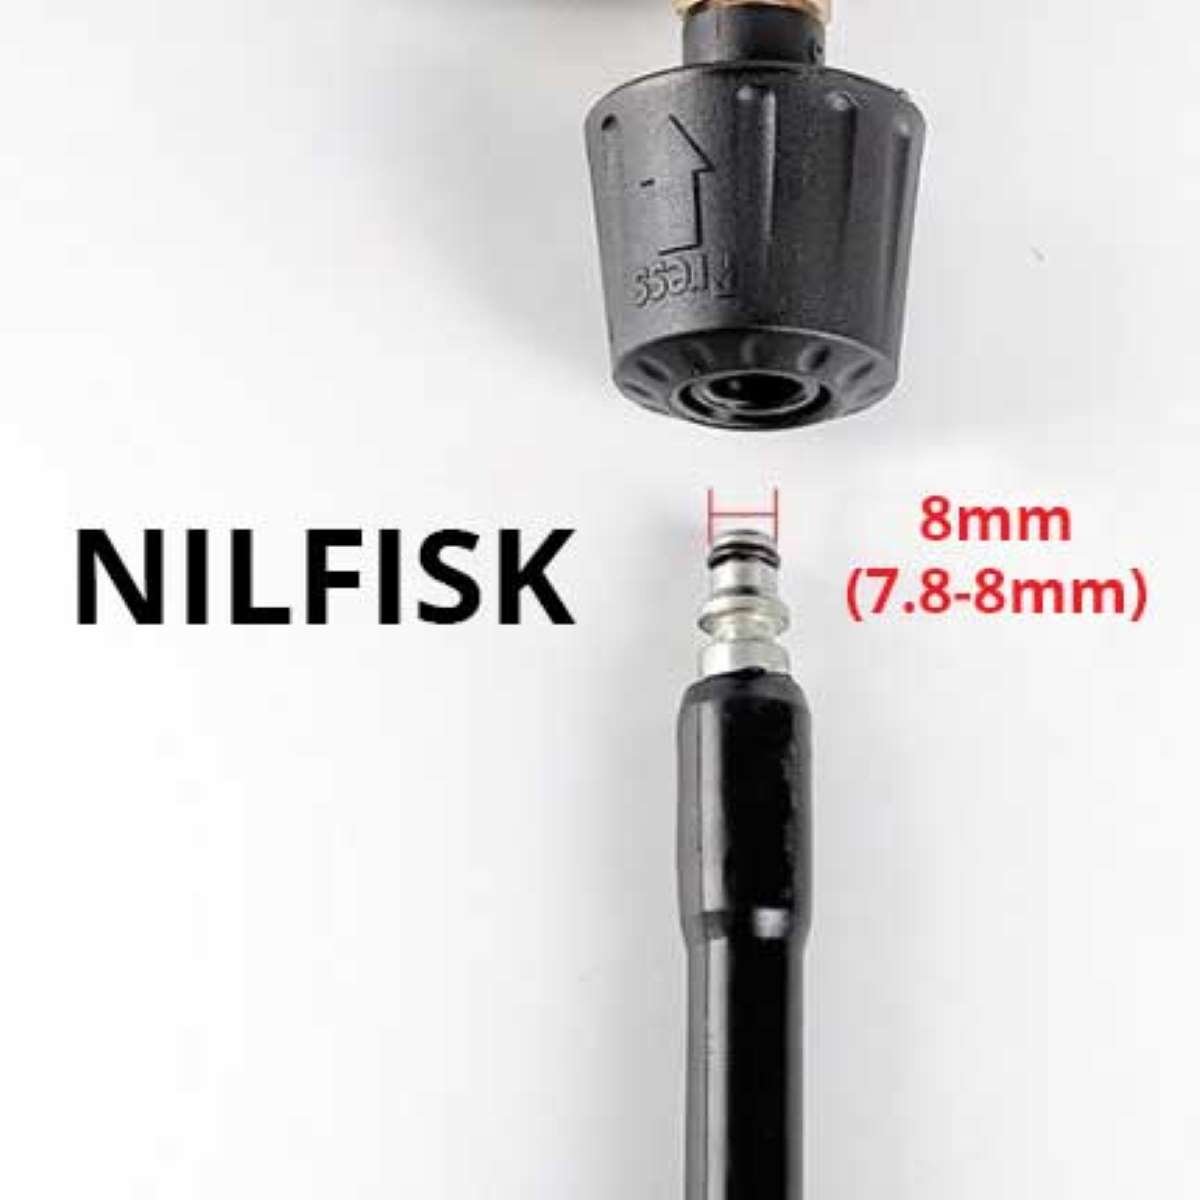 Pistola Corta voor Nilfisk - Black Edition